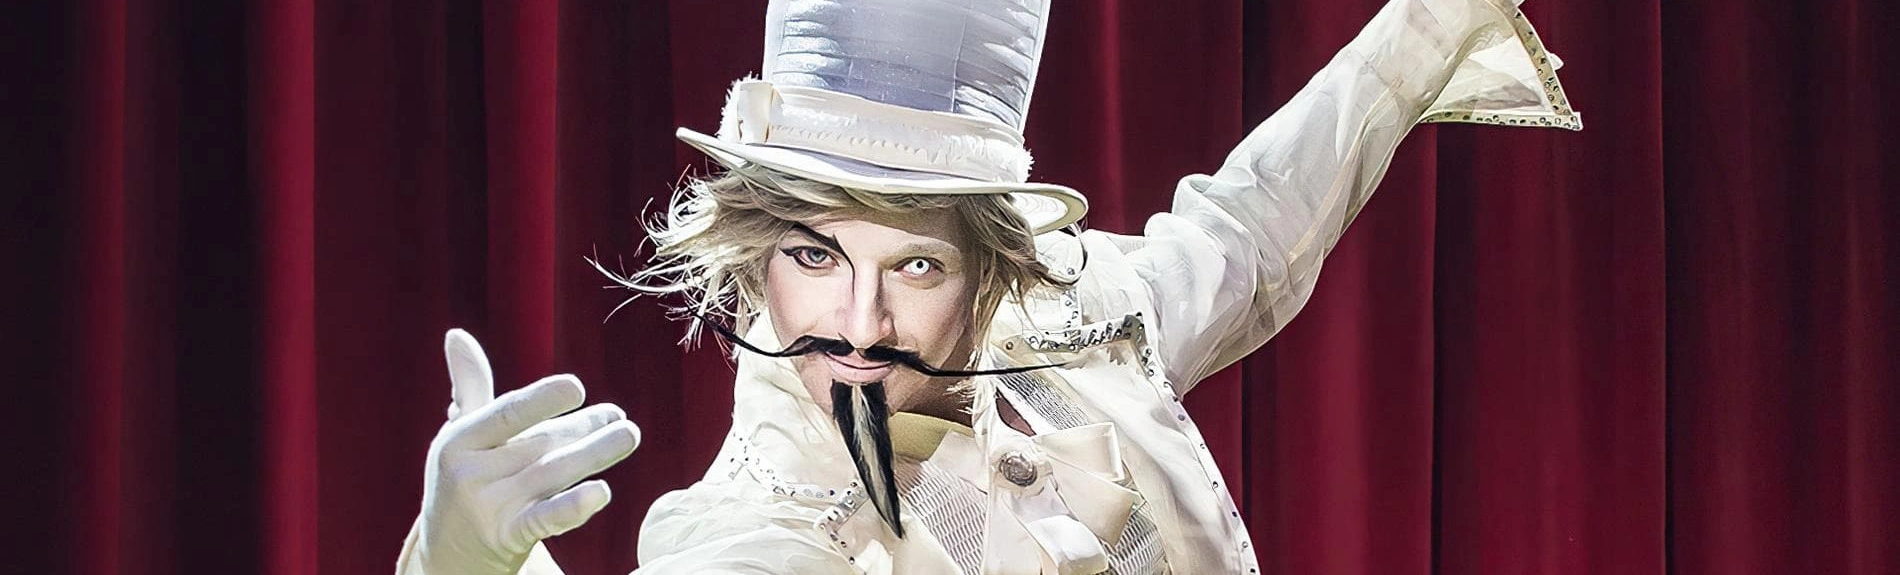 «Принцесса цирка» на сцене Московского театра мюзикла
